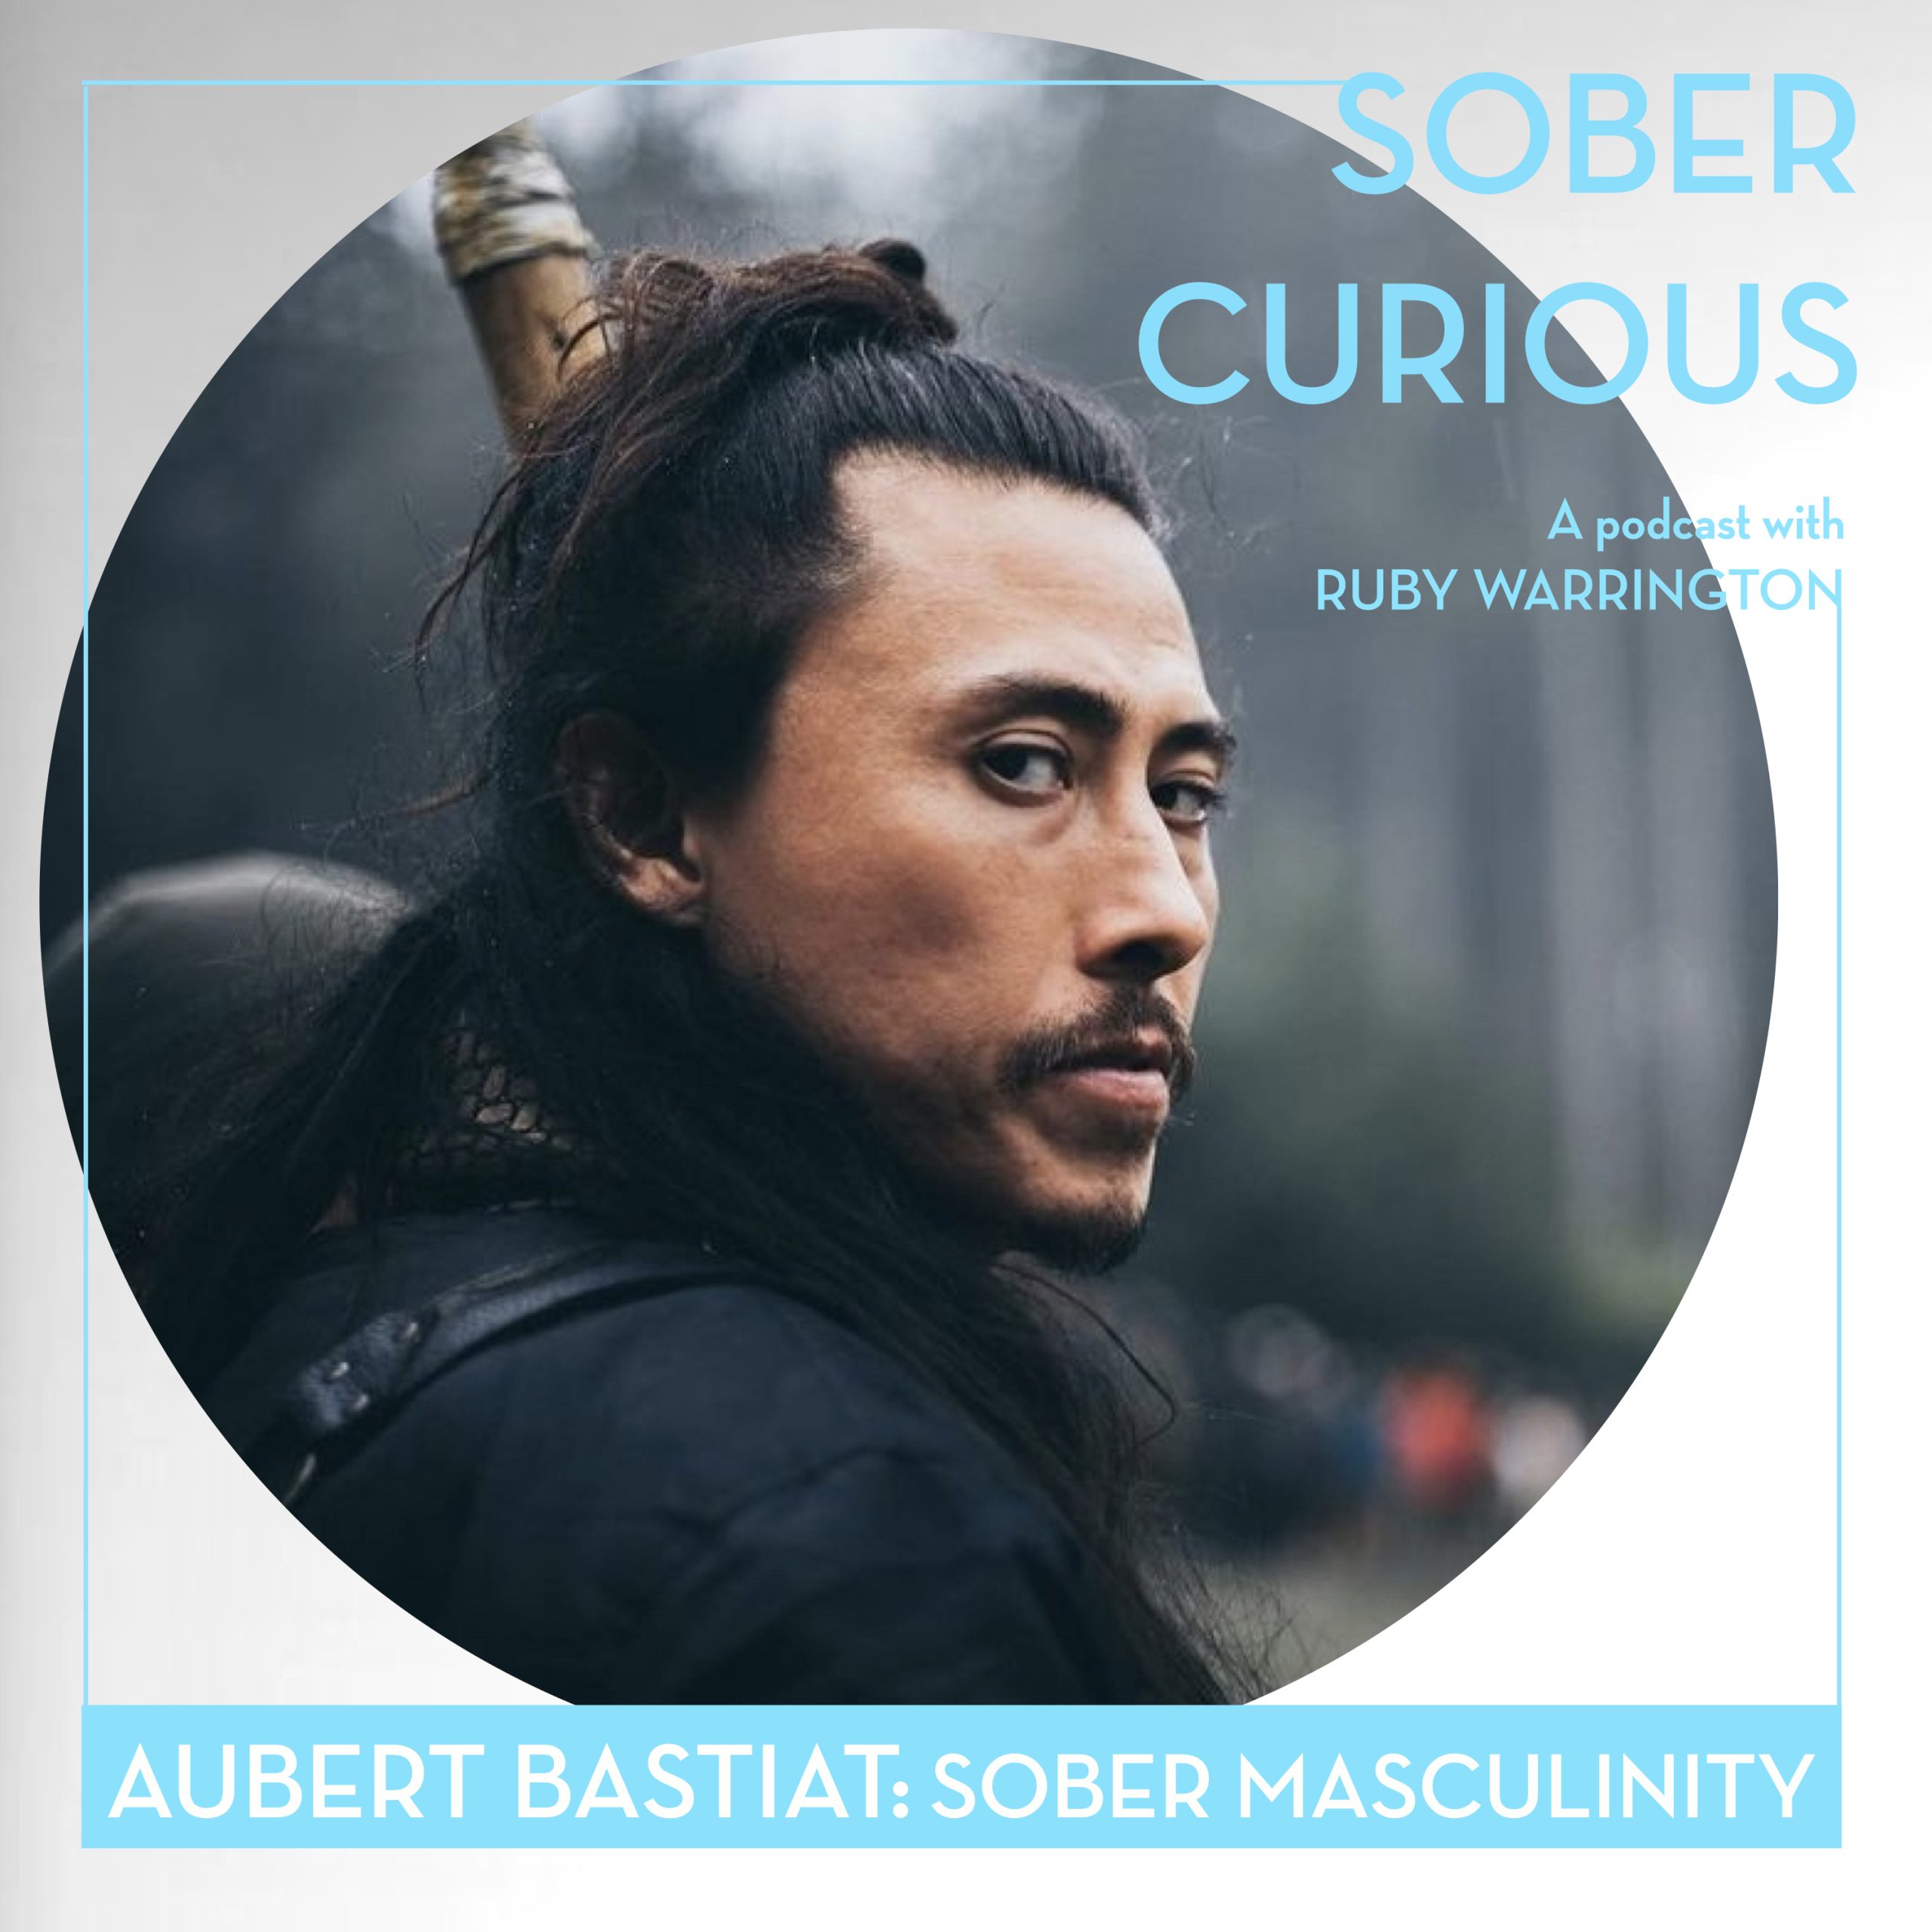 Aubert Bastiat Sacred Sons Sober Curious podcast